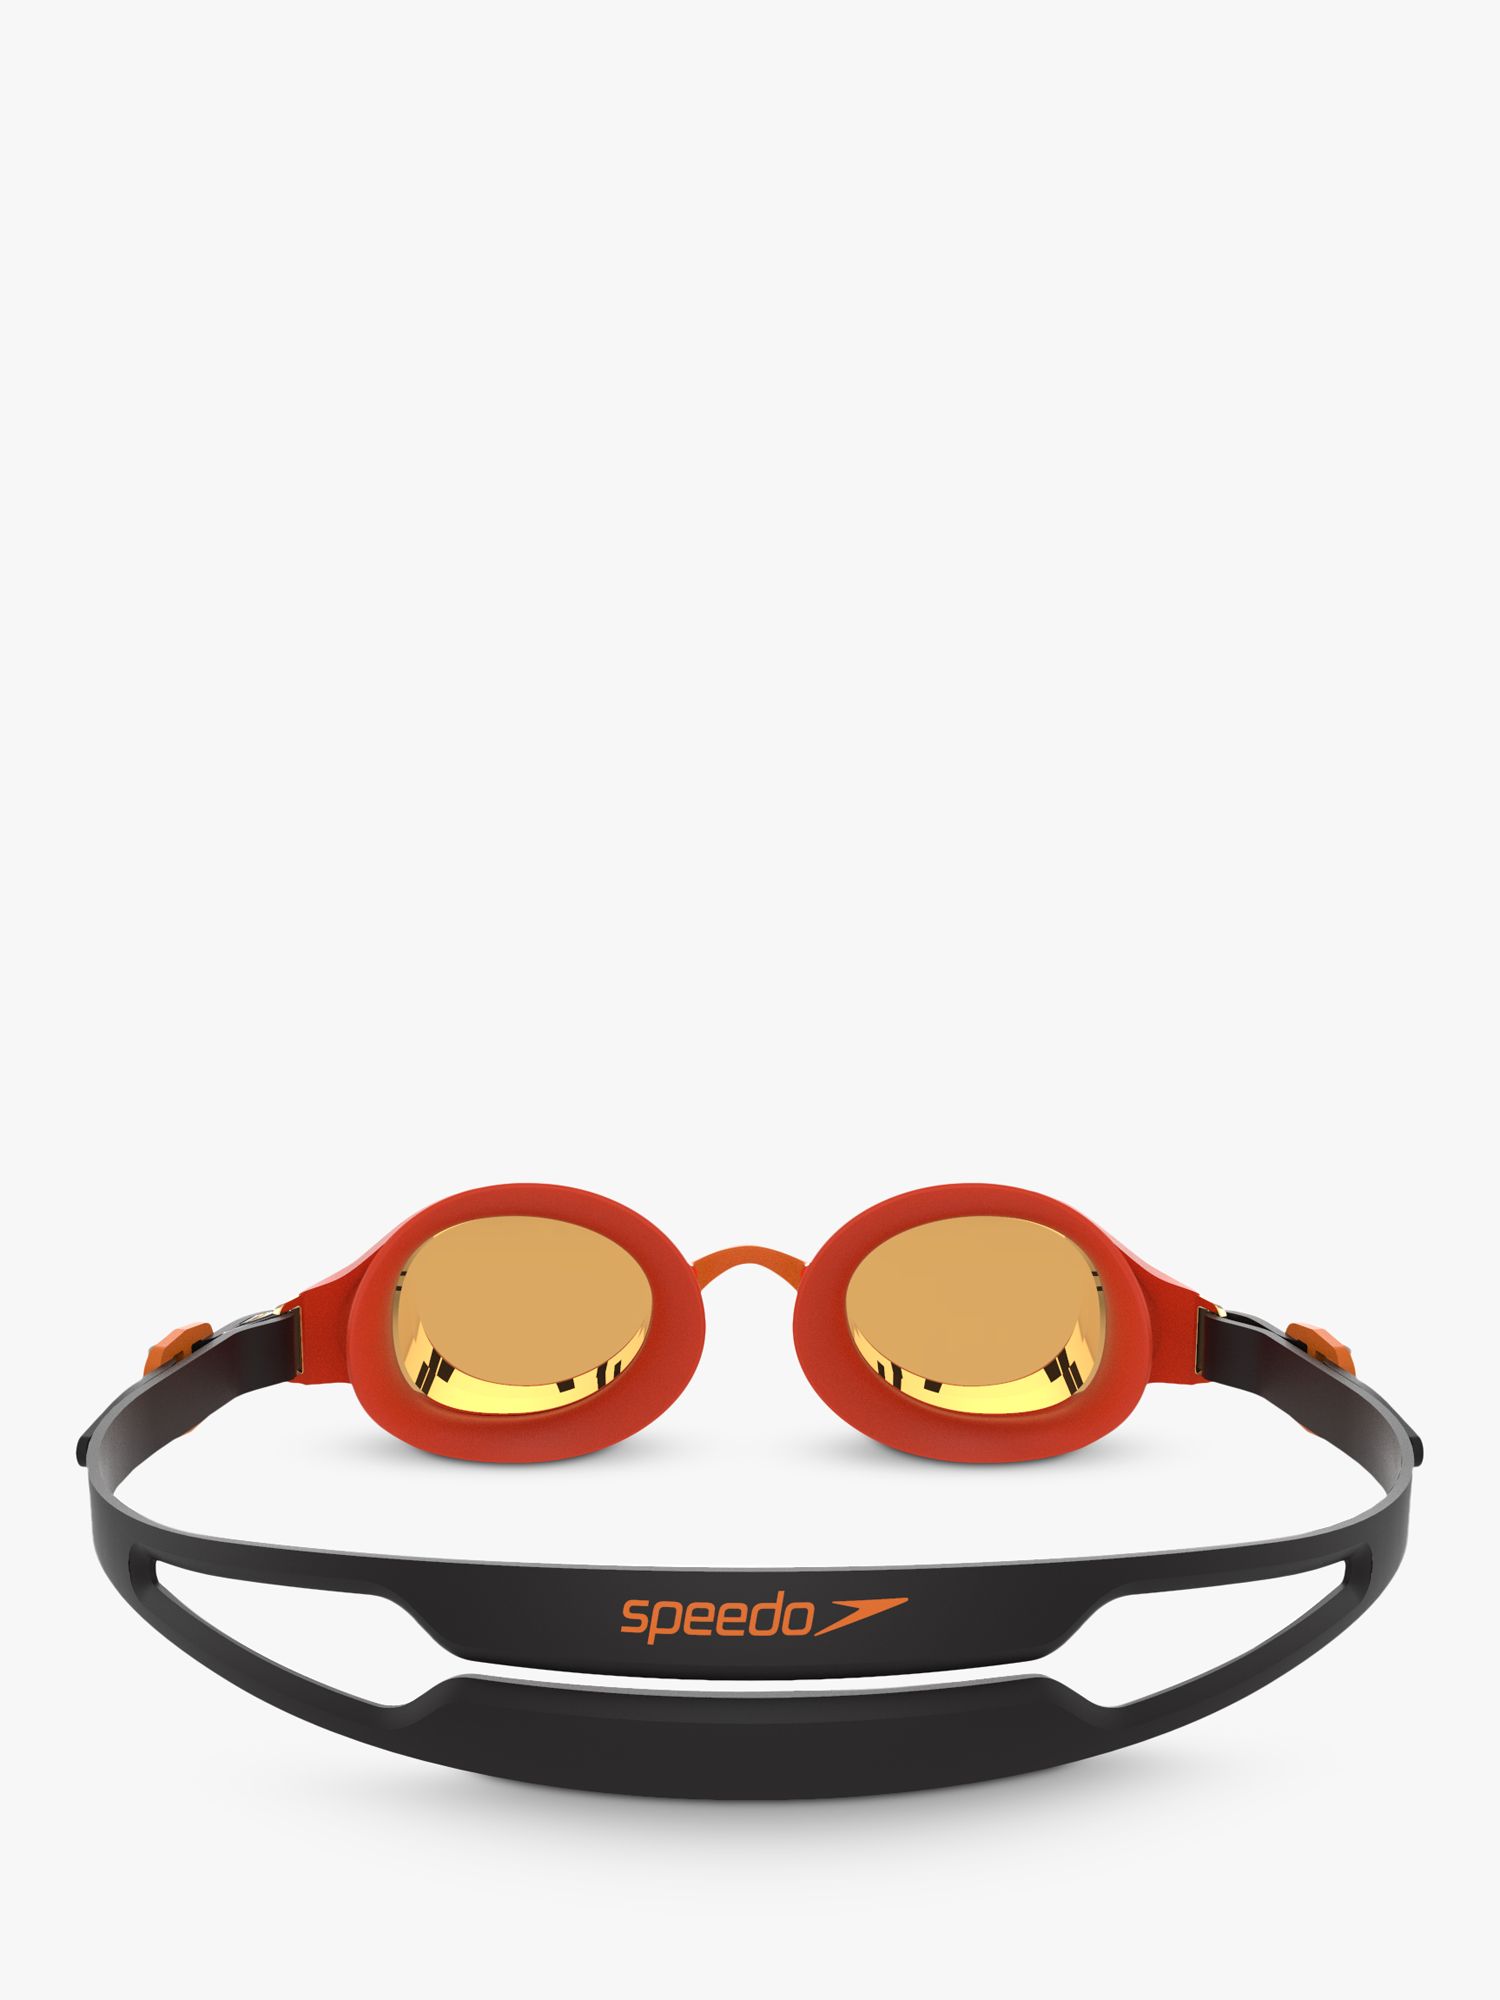 Speedo Hydropure Mirror Children's Swimming Goggles, Black/Mango/Gold